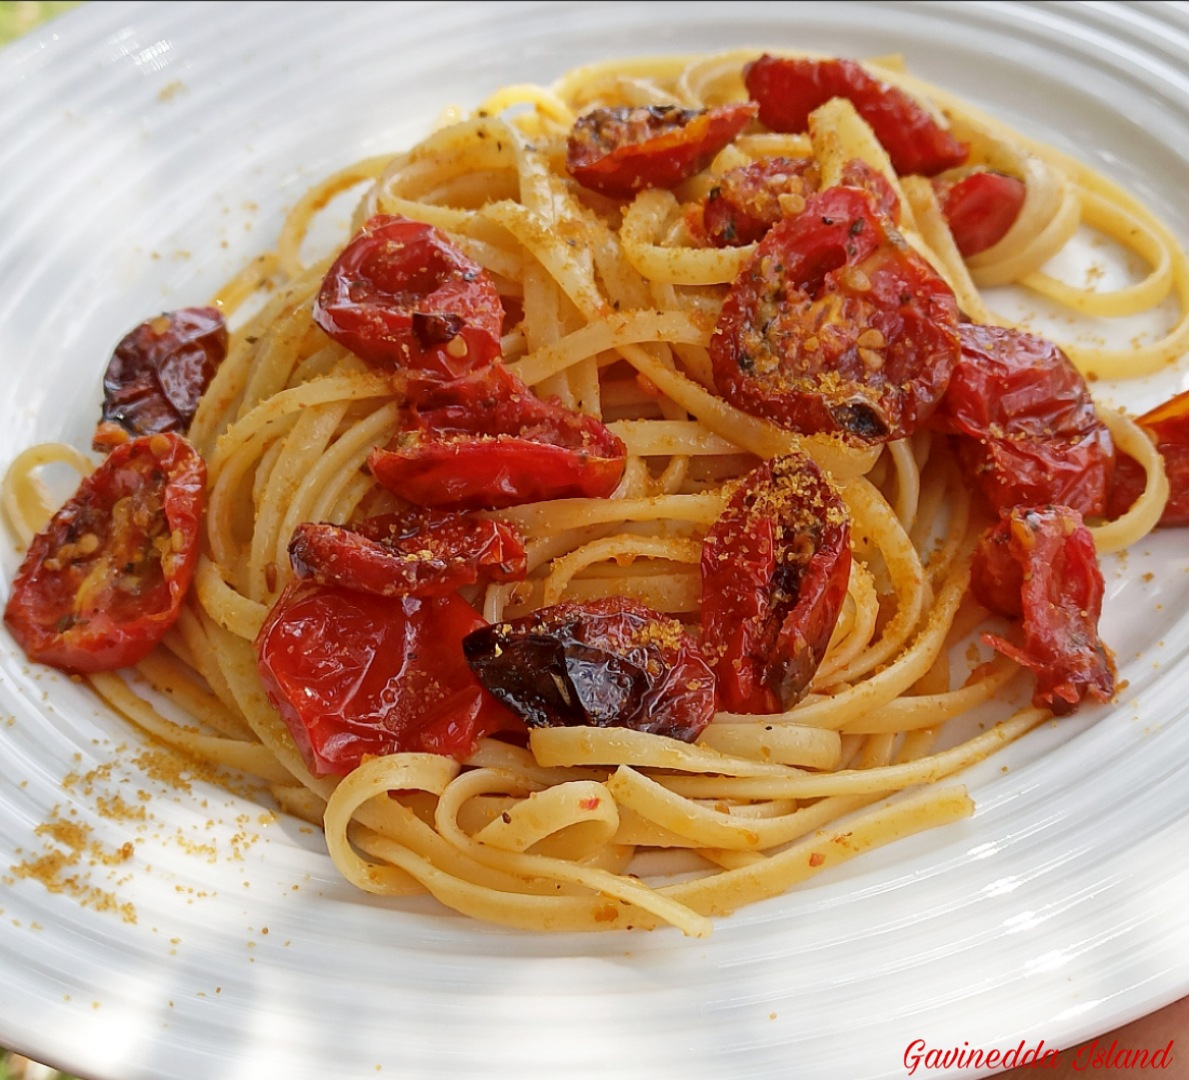 Spaghetti pomodorini confit e bottarga - Gavinedda Island